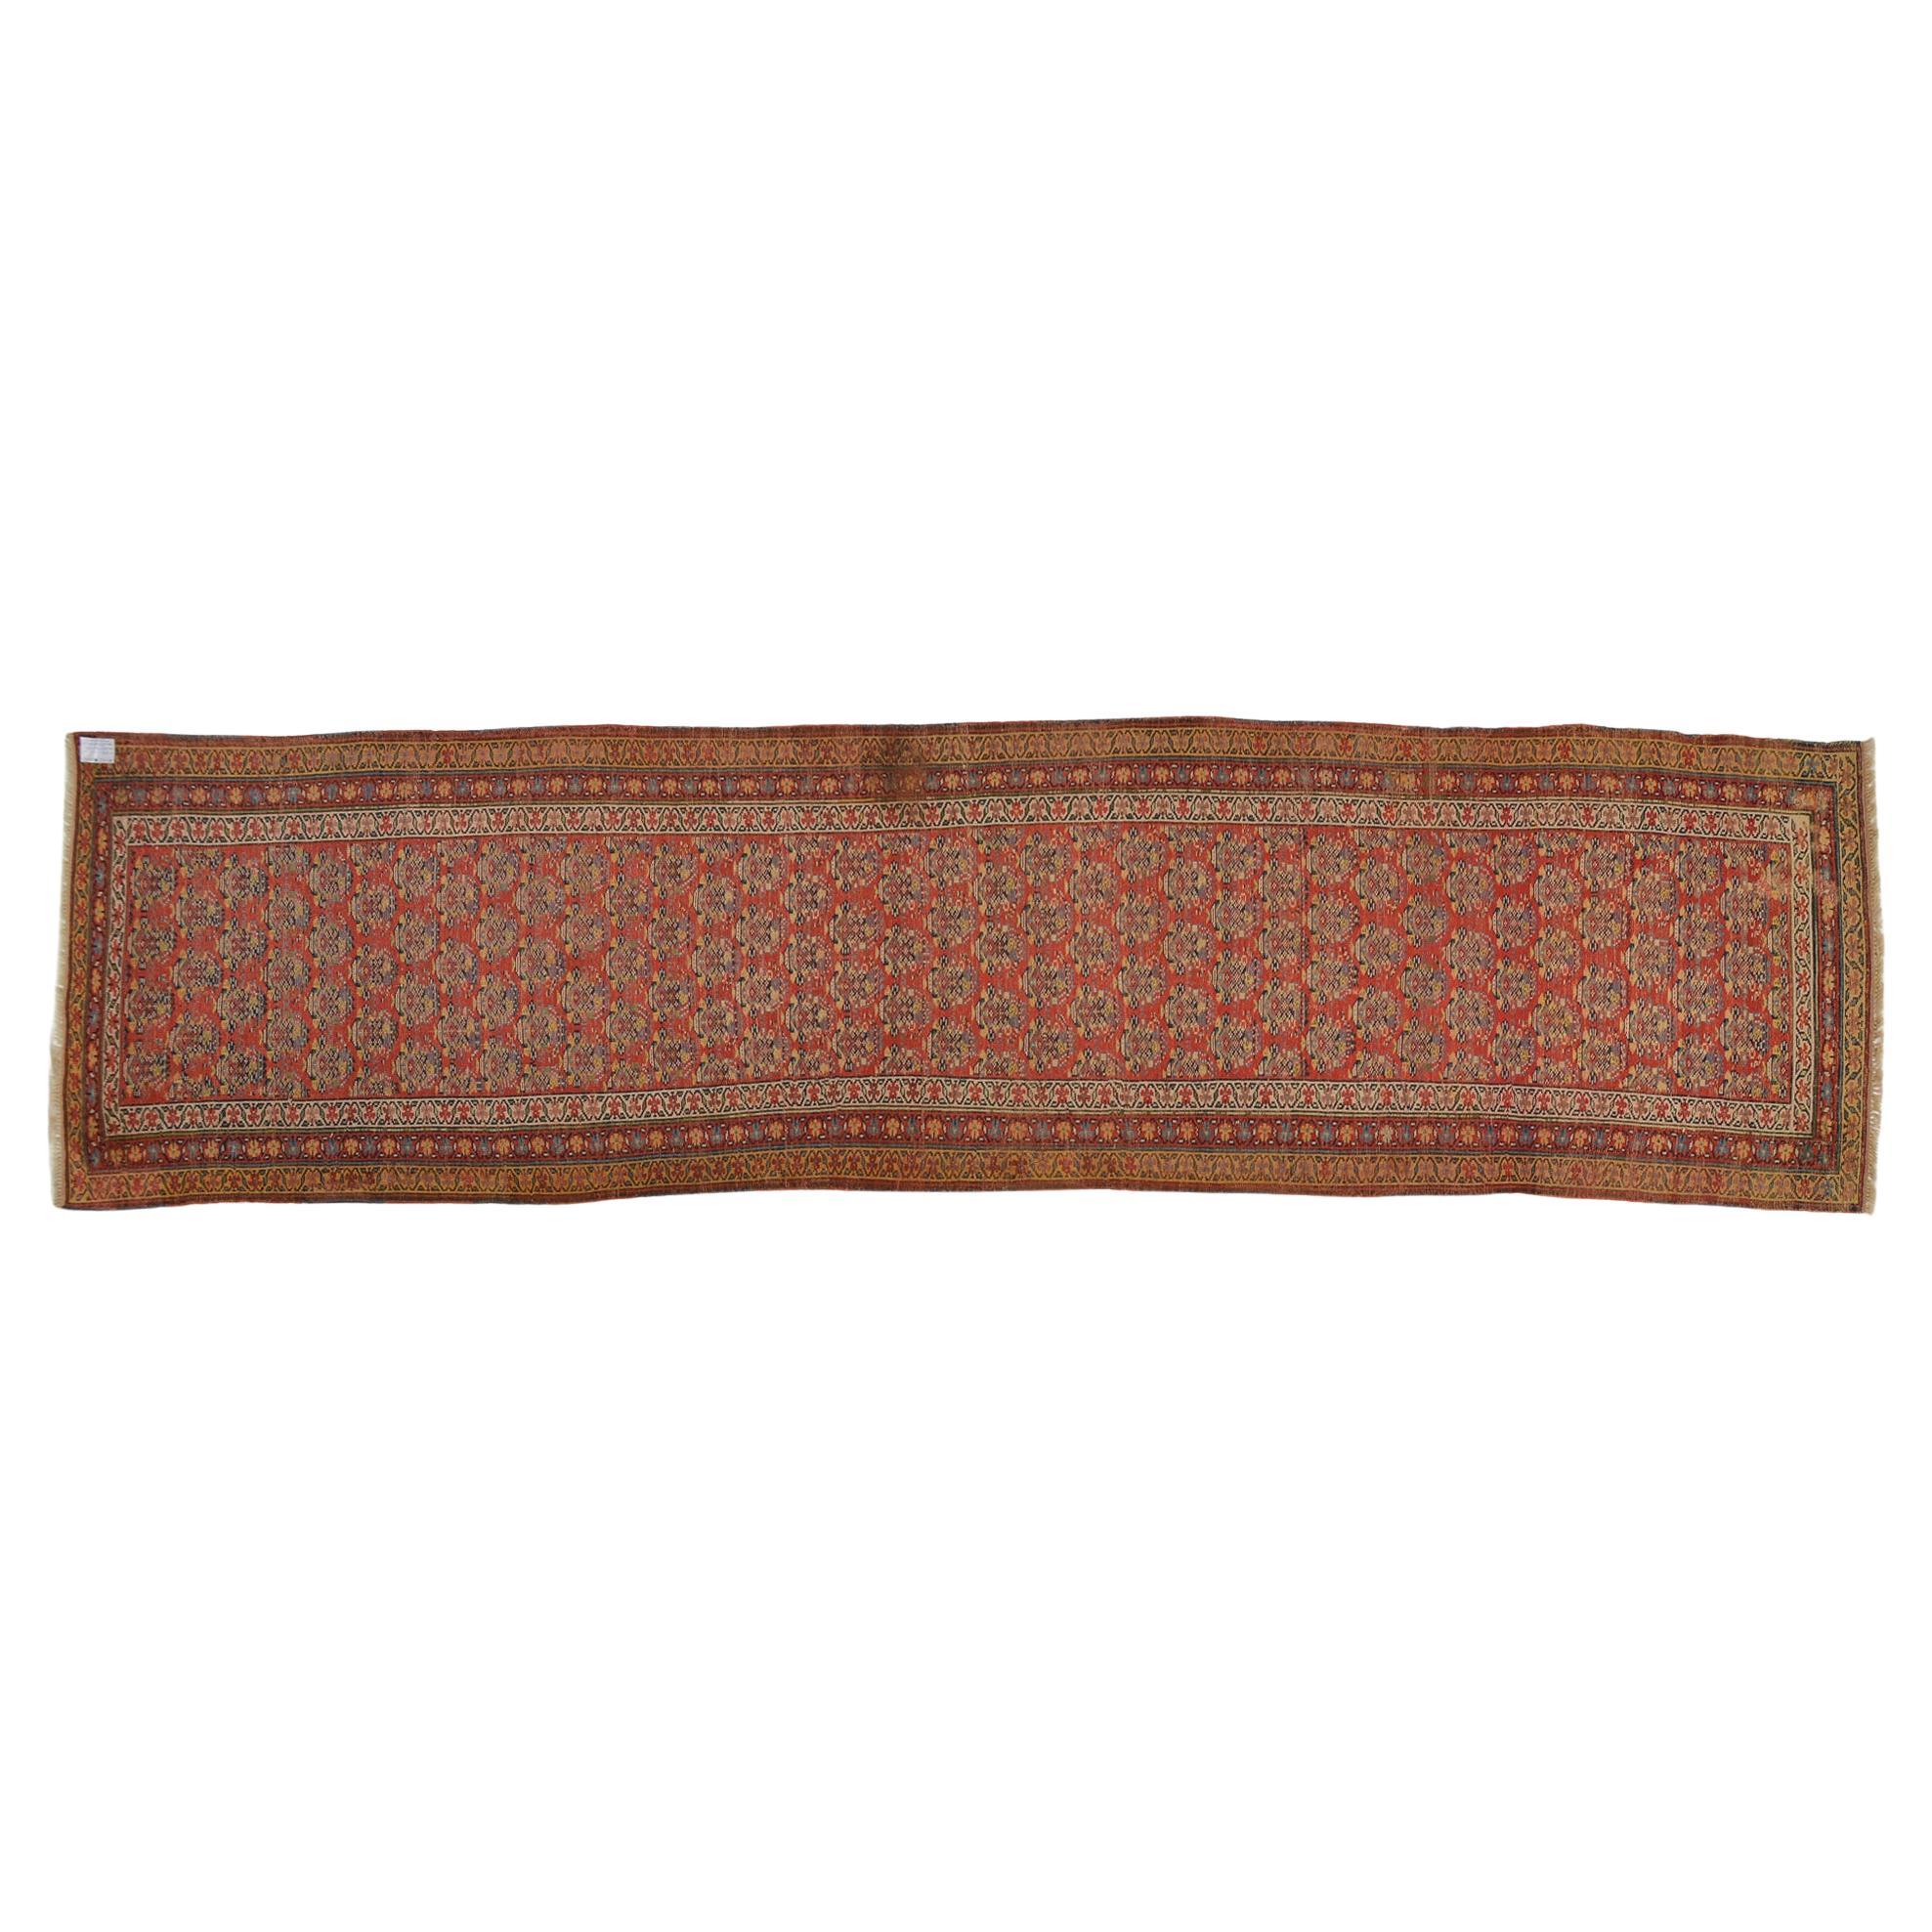 Central Asian Old Oriental Carpet Runner For Sale